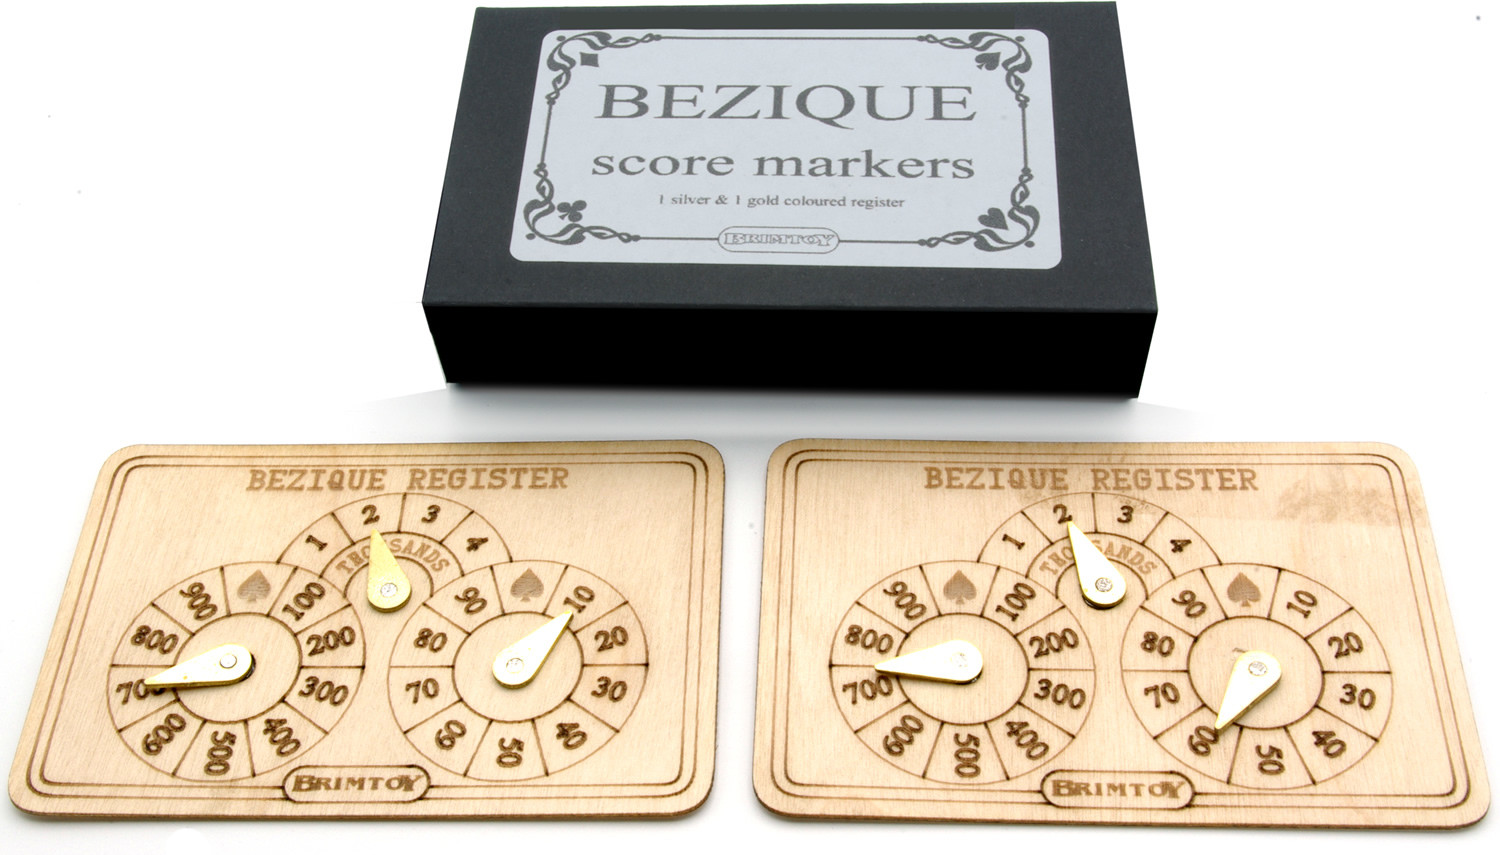 Bezique scorers / markers. British score registers